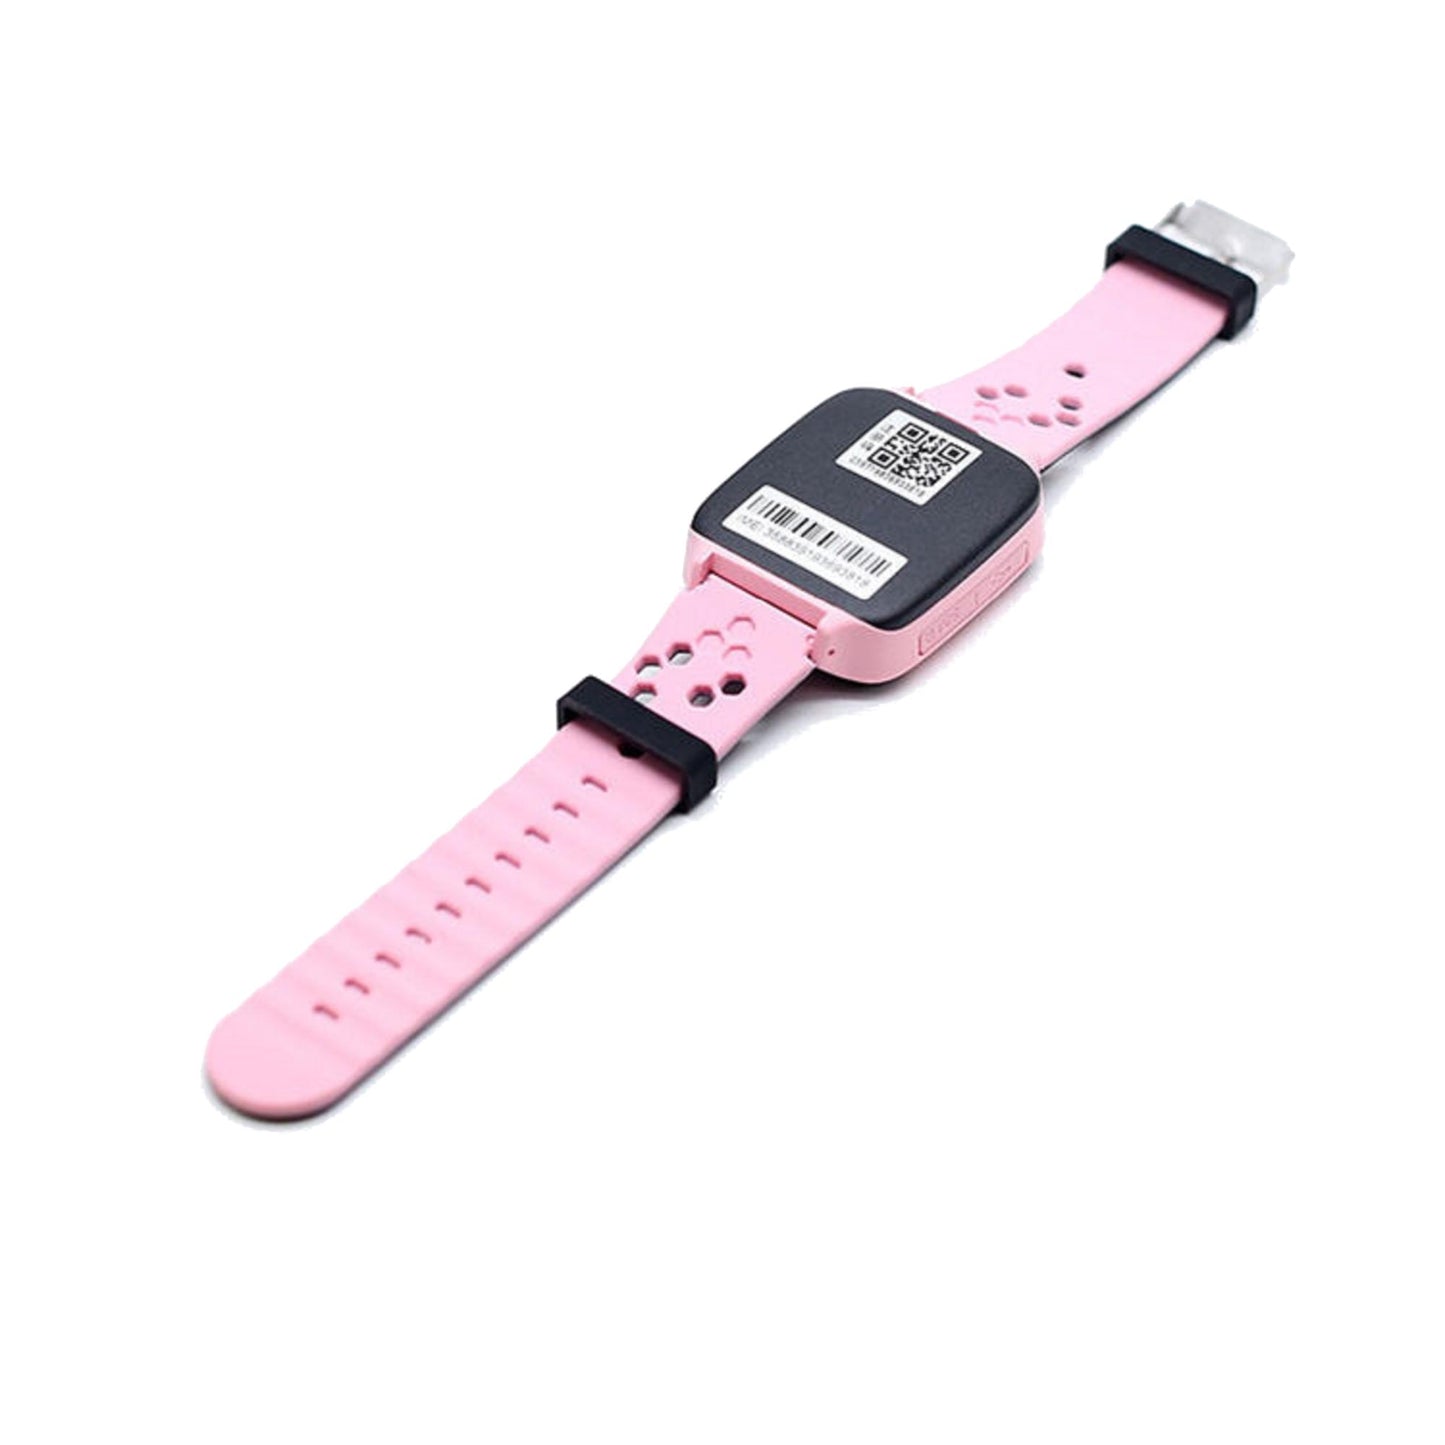 Smartwatch für Kinder - Karen M G900A, 1,44-Zoll-TFT-Bildschirm, GPS-Tracking, integrierte Kamera. | Blue Chilli Electronics.